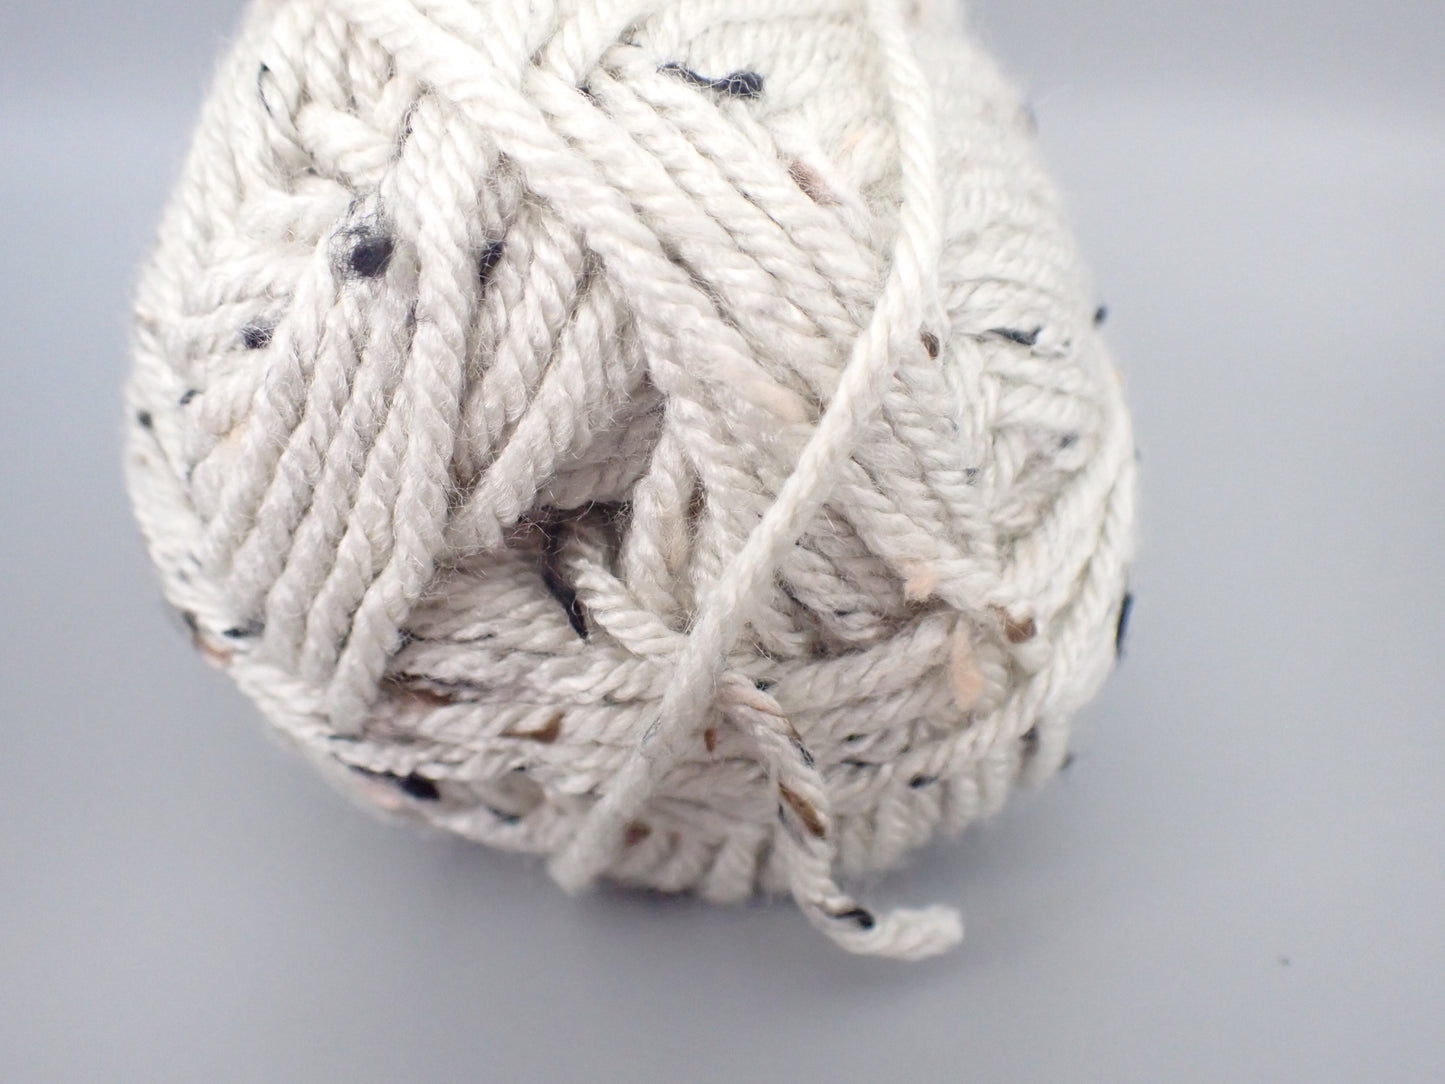 Lion Brand Yarns Worsted weight Basic Stitch Anti Pilling Almond Tweed